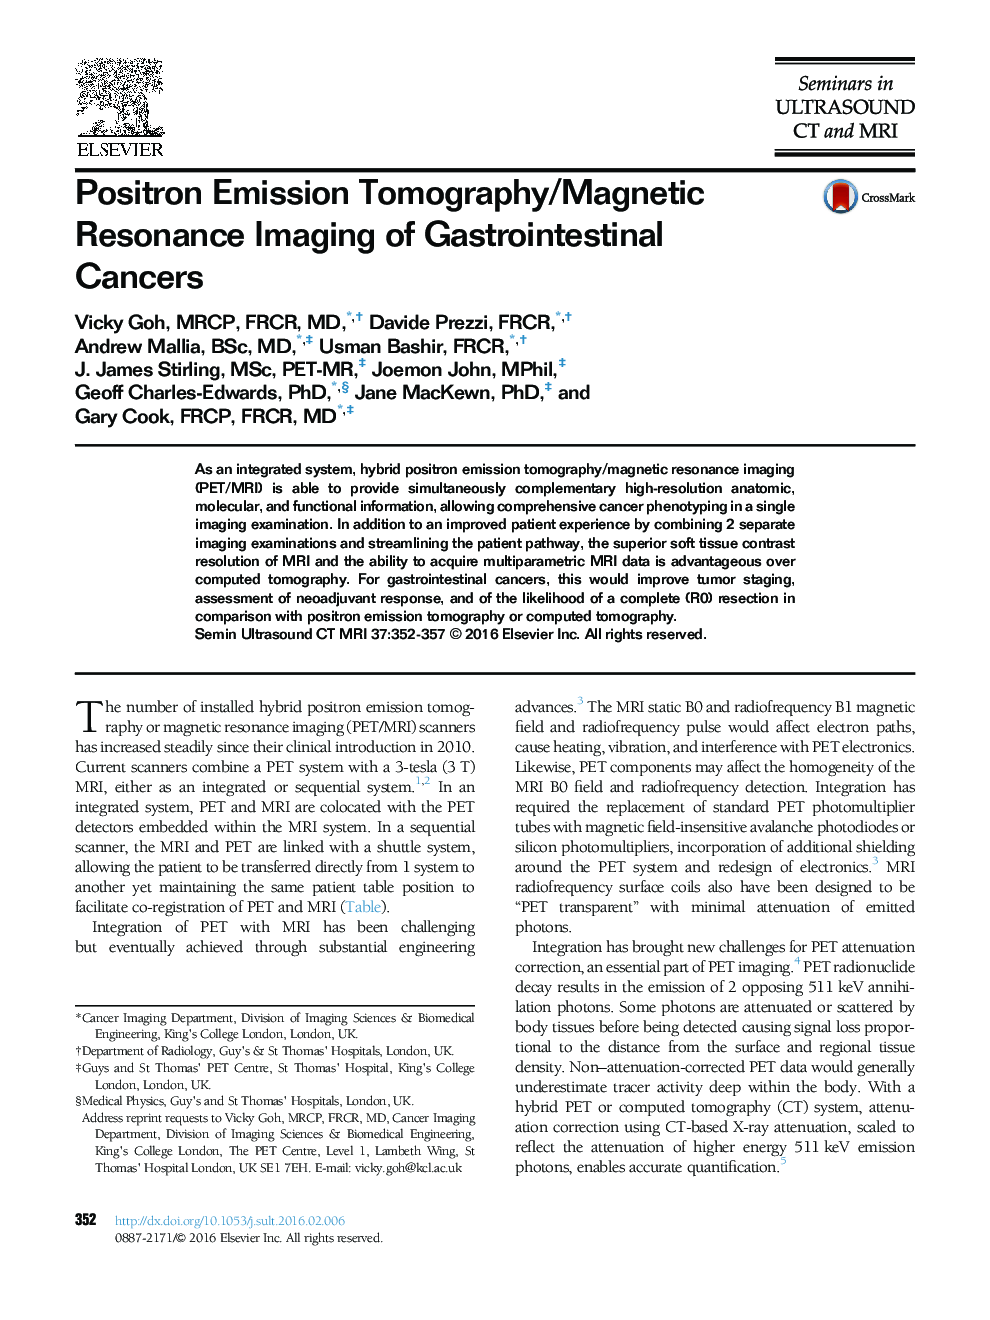 Positron Emission Tomography/Magnetic Resonance Imaging of Gastrointestinal Cancers